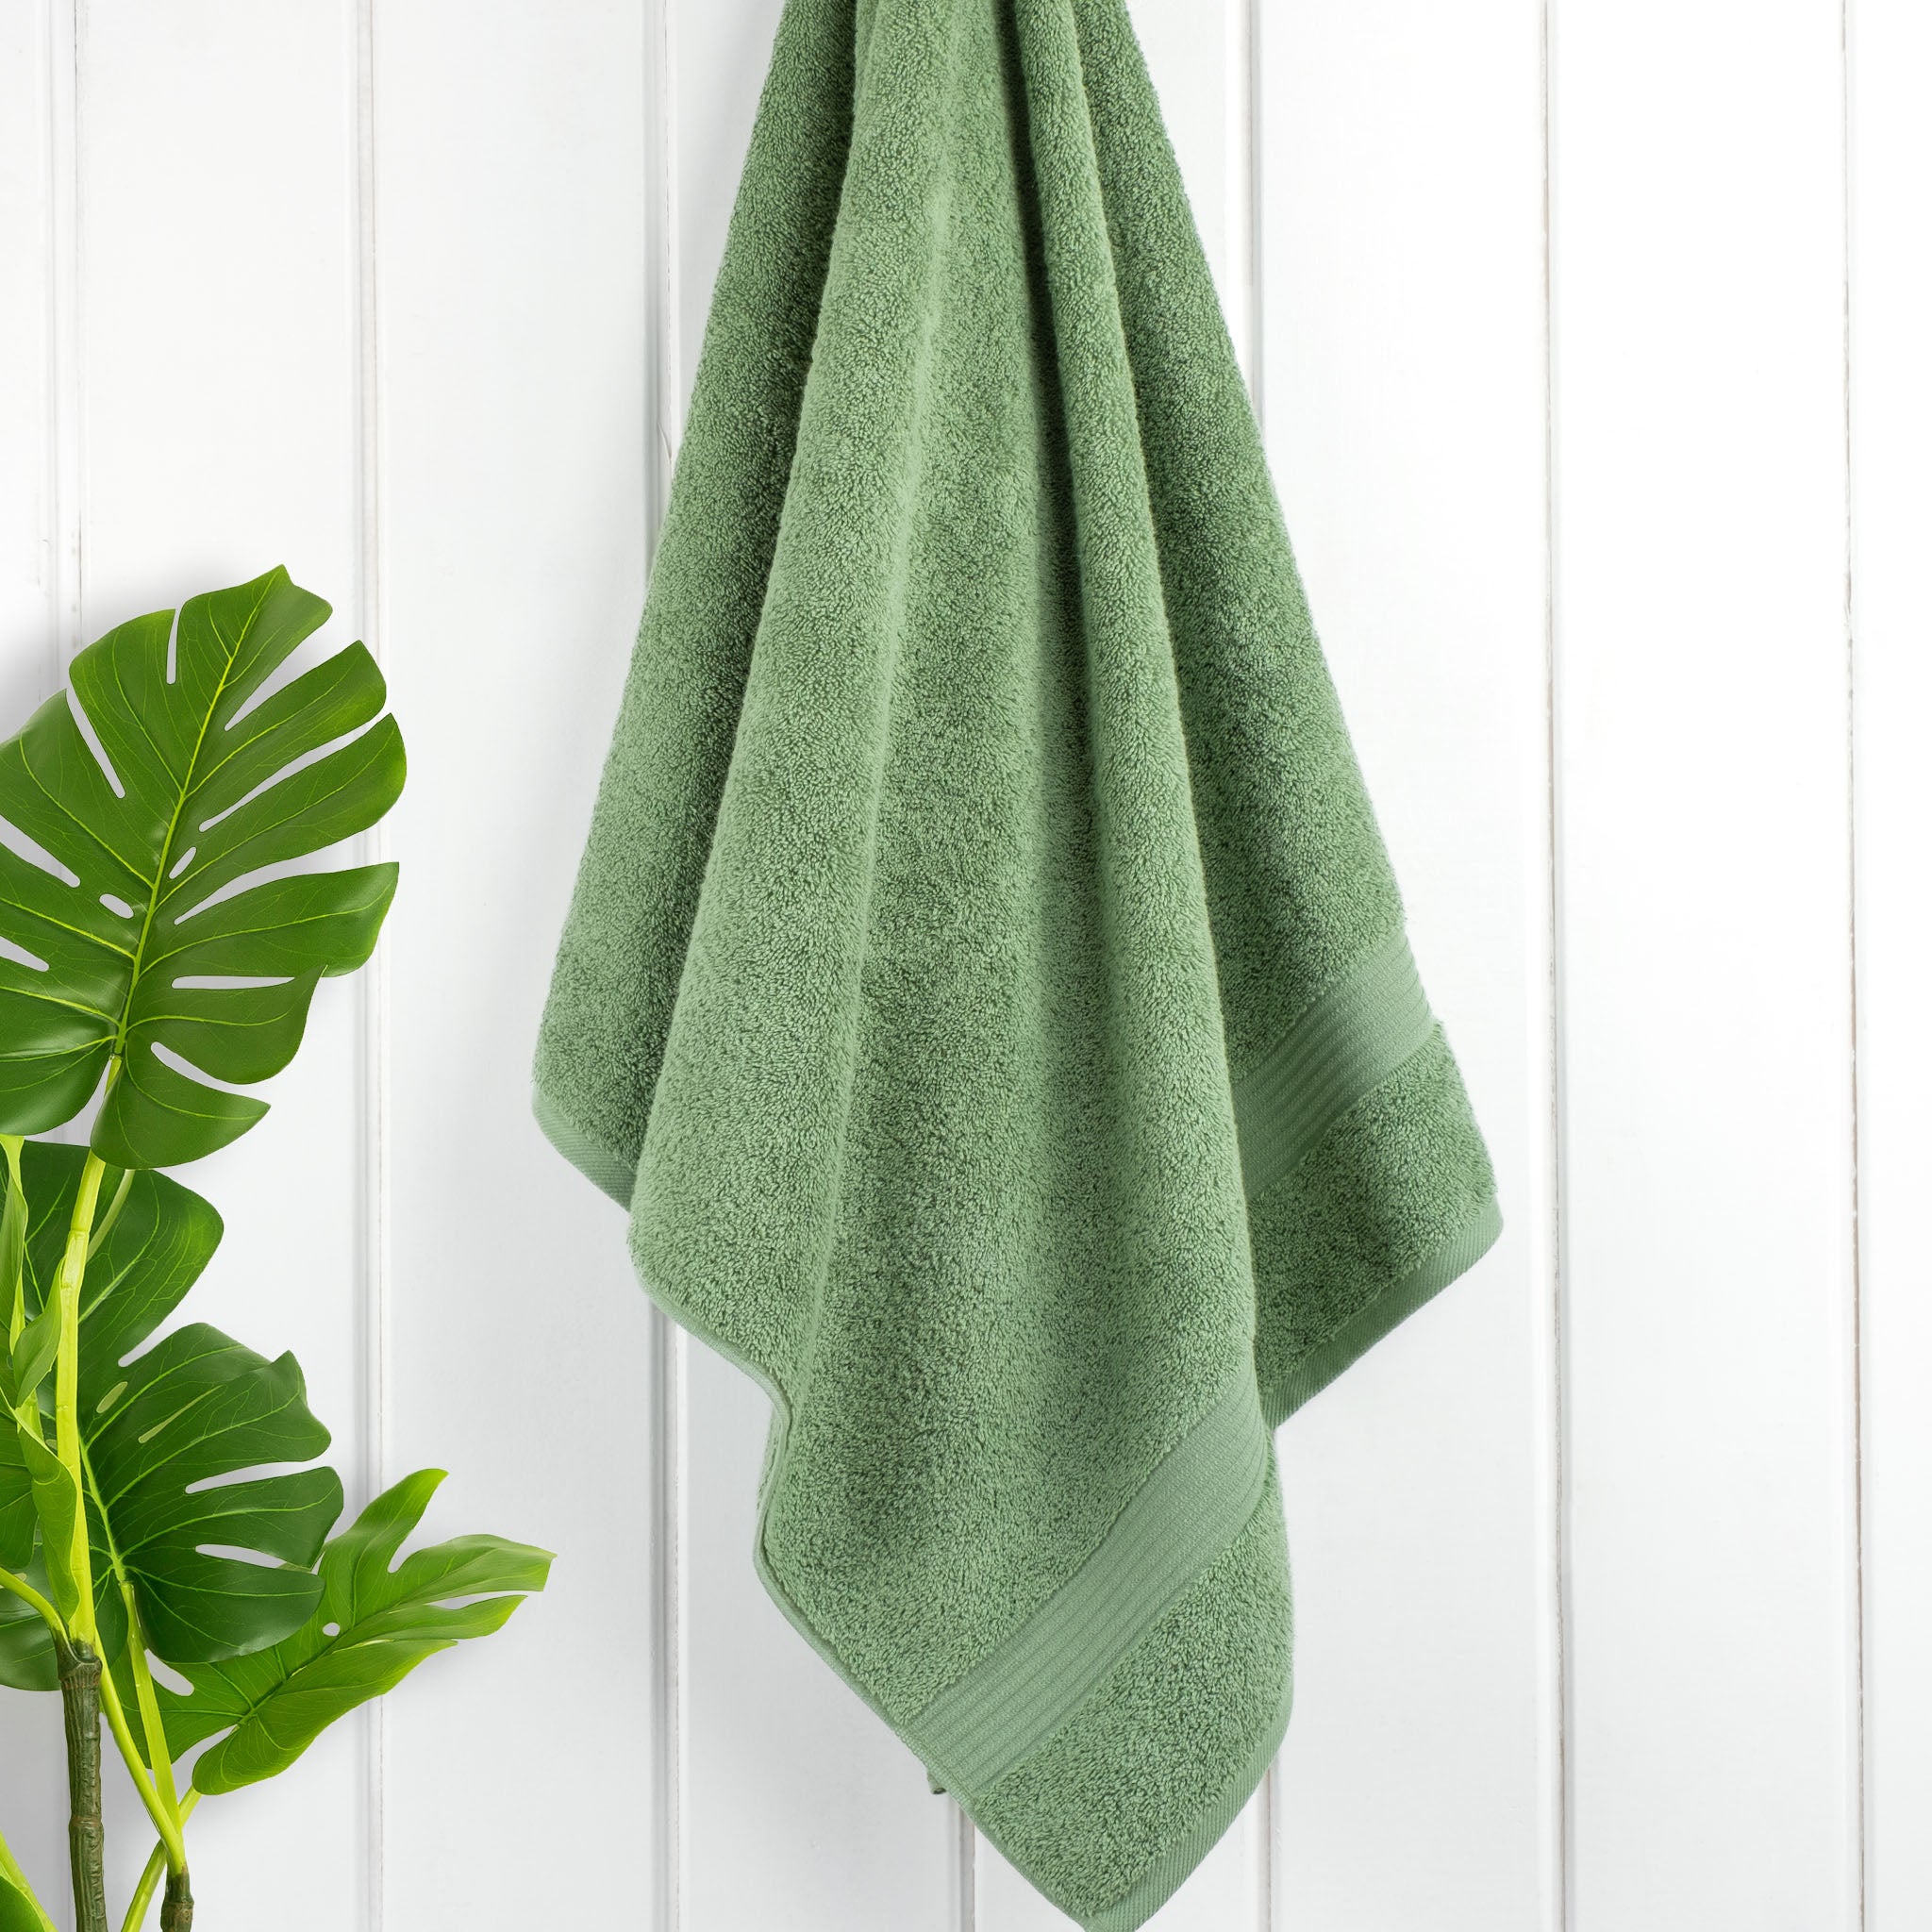 American Soft Linen Bekos 100% Cotton Turkish Towels, 4 Piece Bath Towel Set -sage-green-02